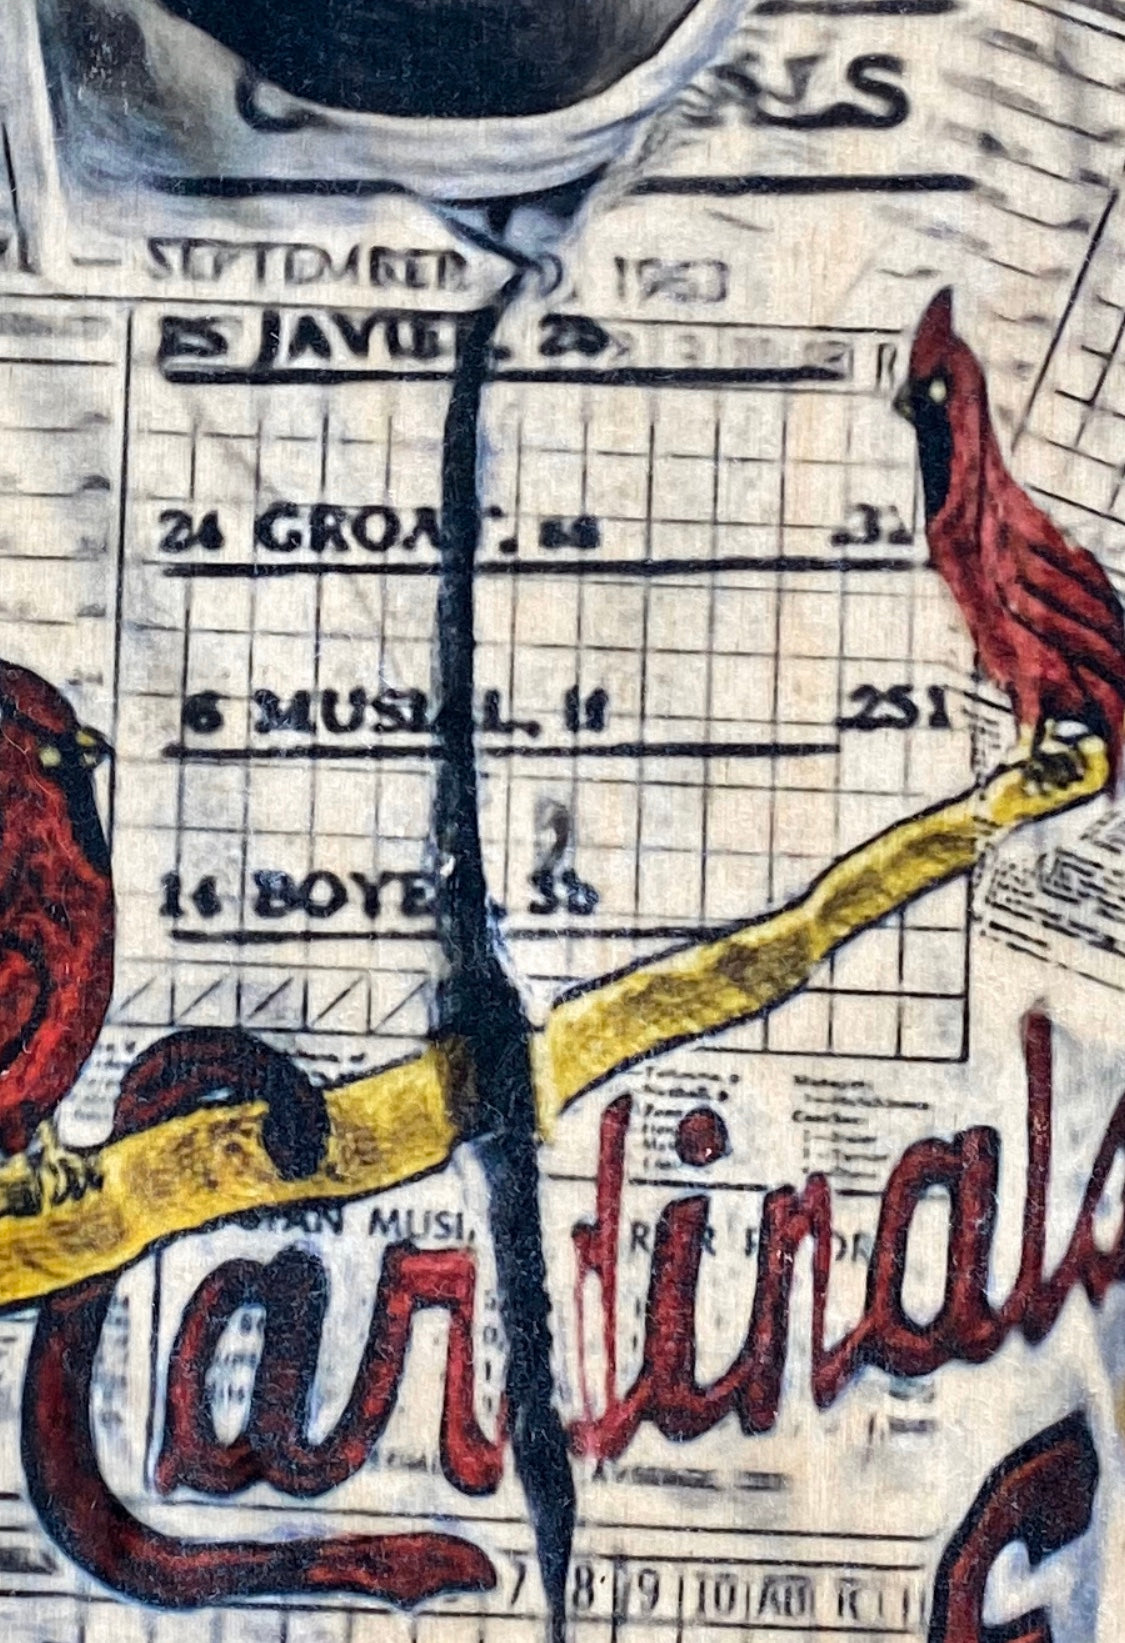 "The Man" (Stan Musial) St. Louis Cardinals - 1/1 Original on Wood